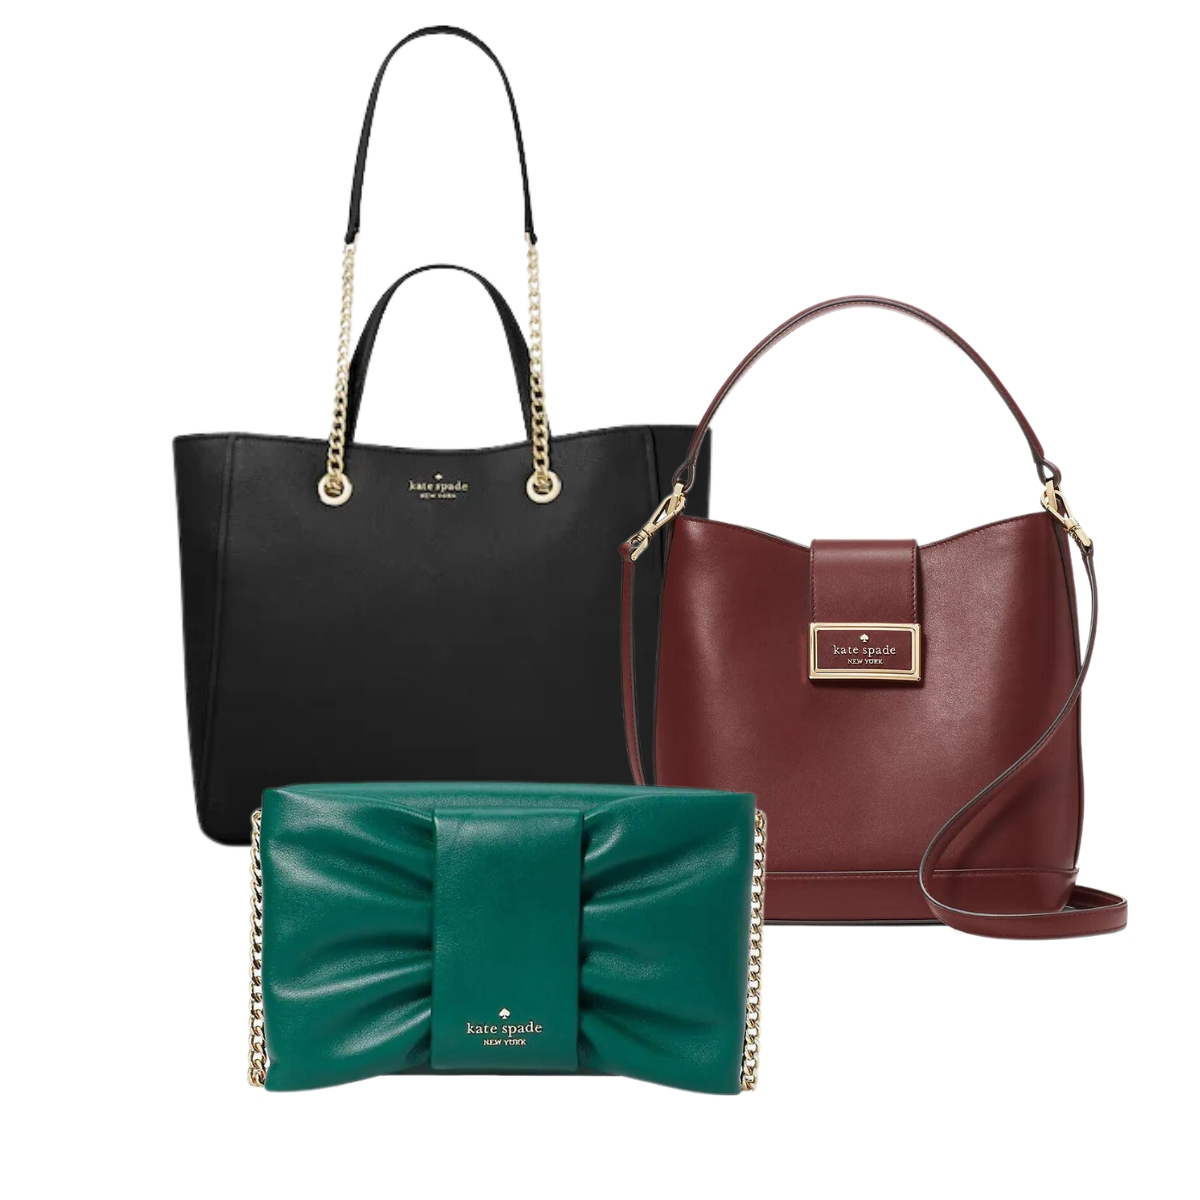 Kate spade new york Handbags, Women's Bags & Accessories